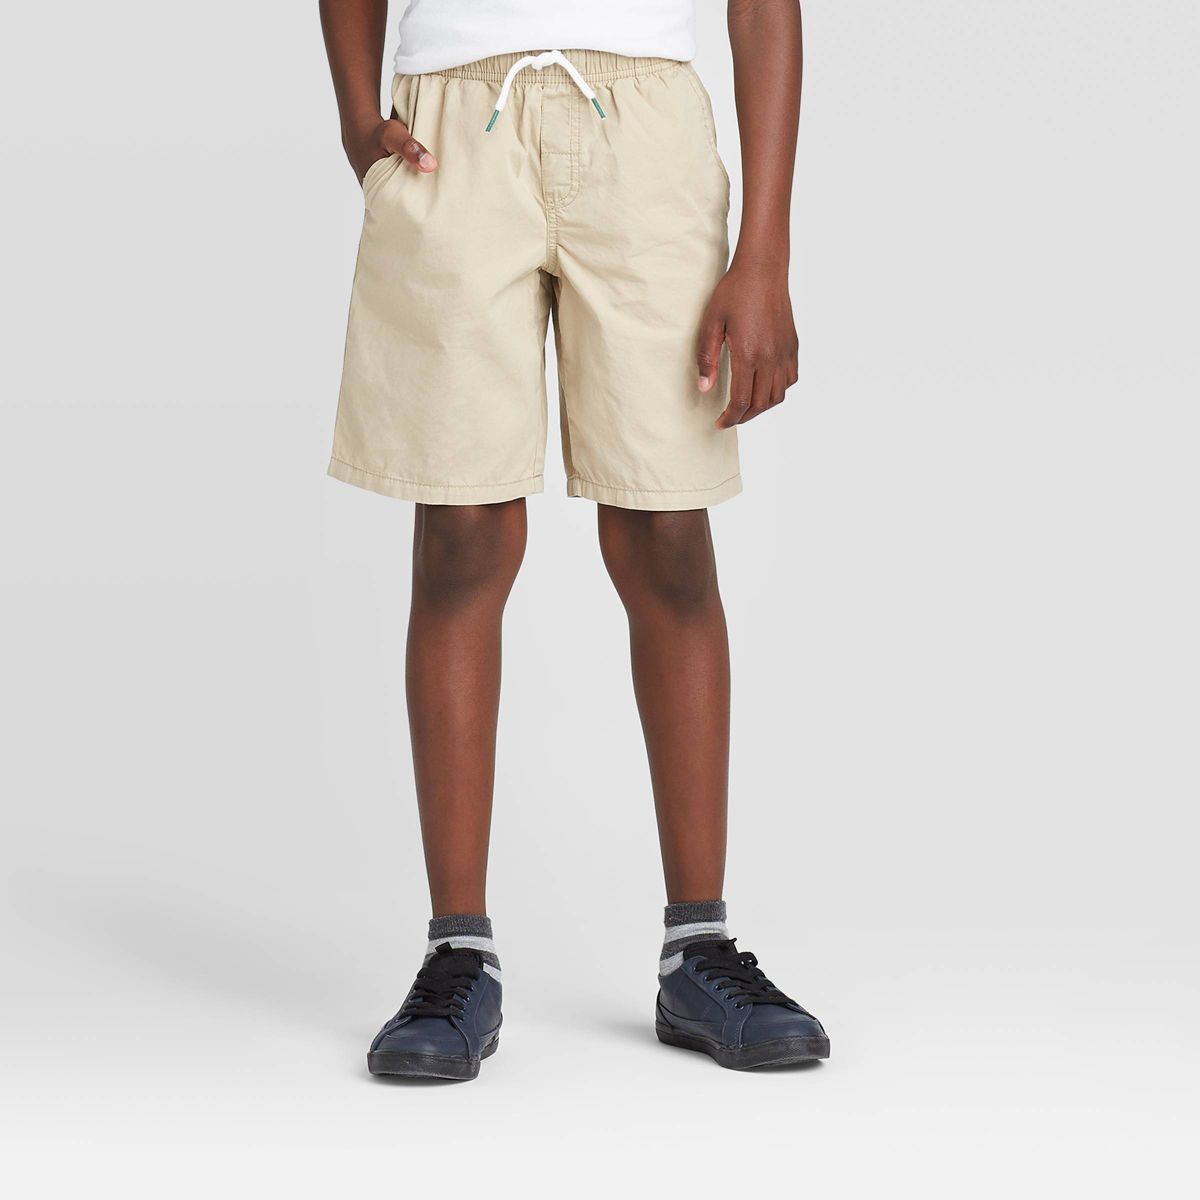 Boys' Playwear 'At the Knee' Pull-On Shorts - Cat & Jack™ Light Khaki M | Target